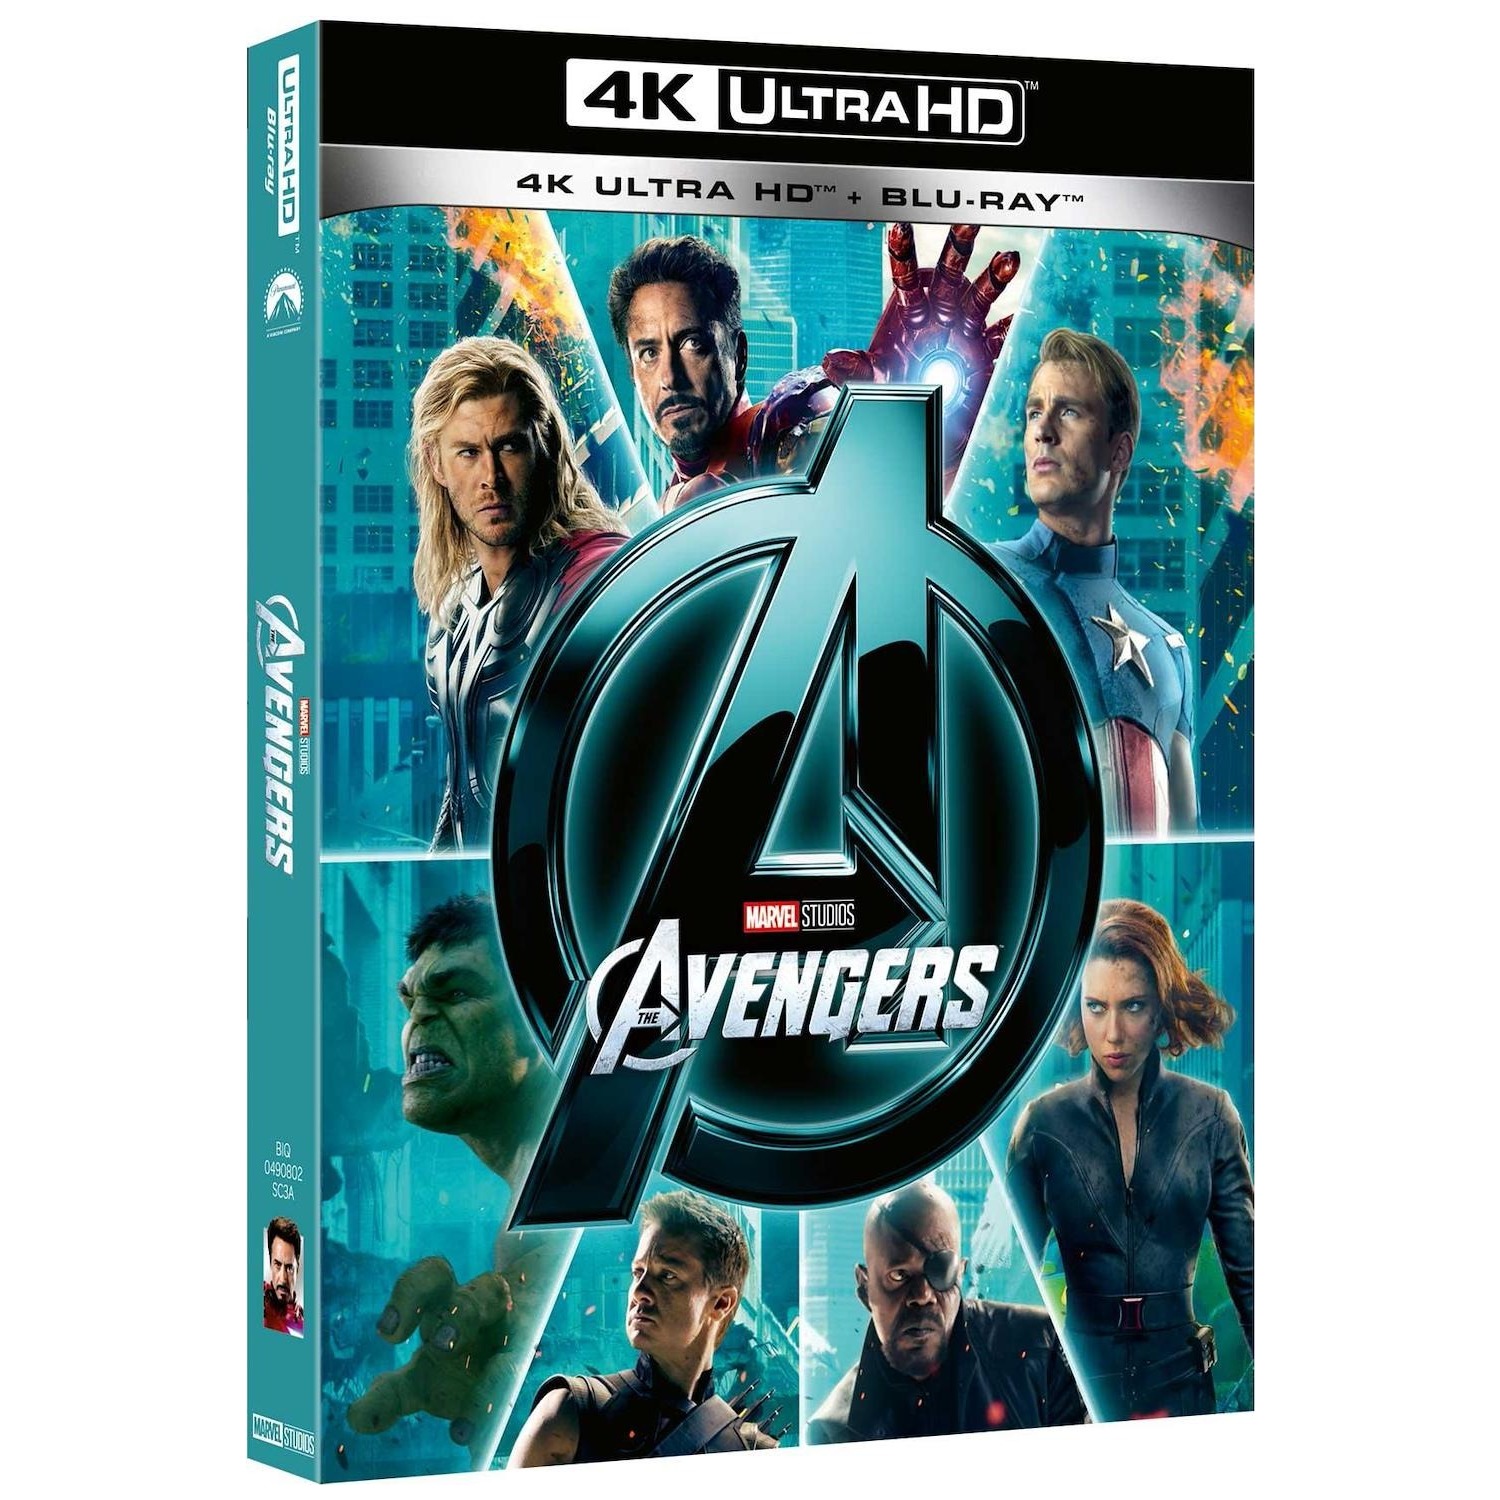 Immagine per Blu-ray 4K The Avengers da DIMOStore